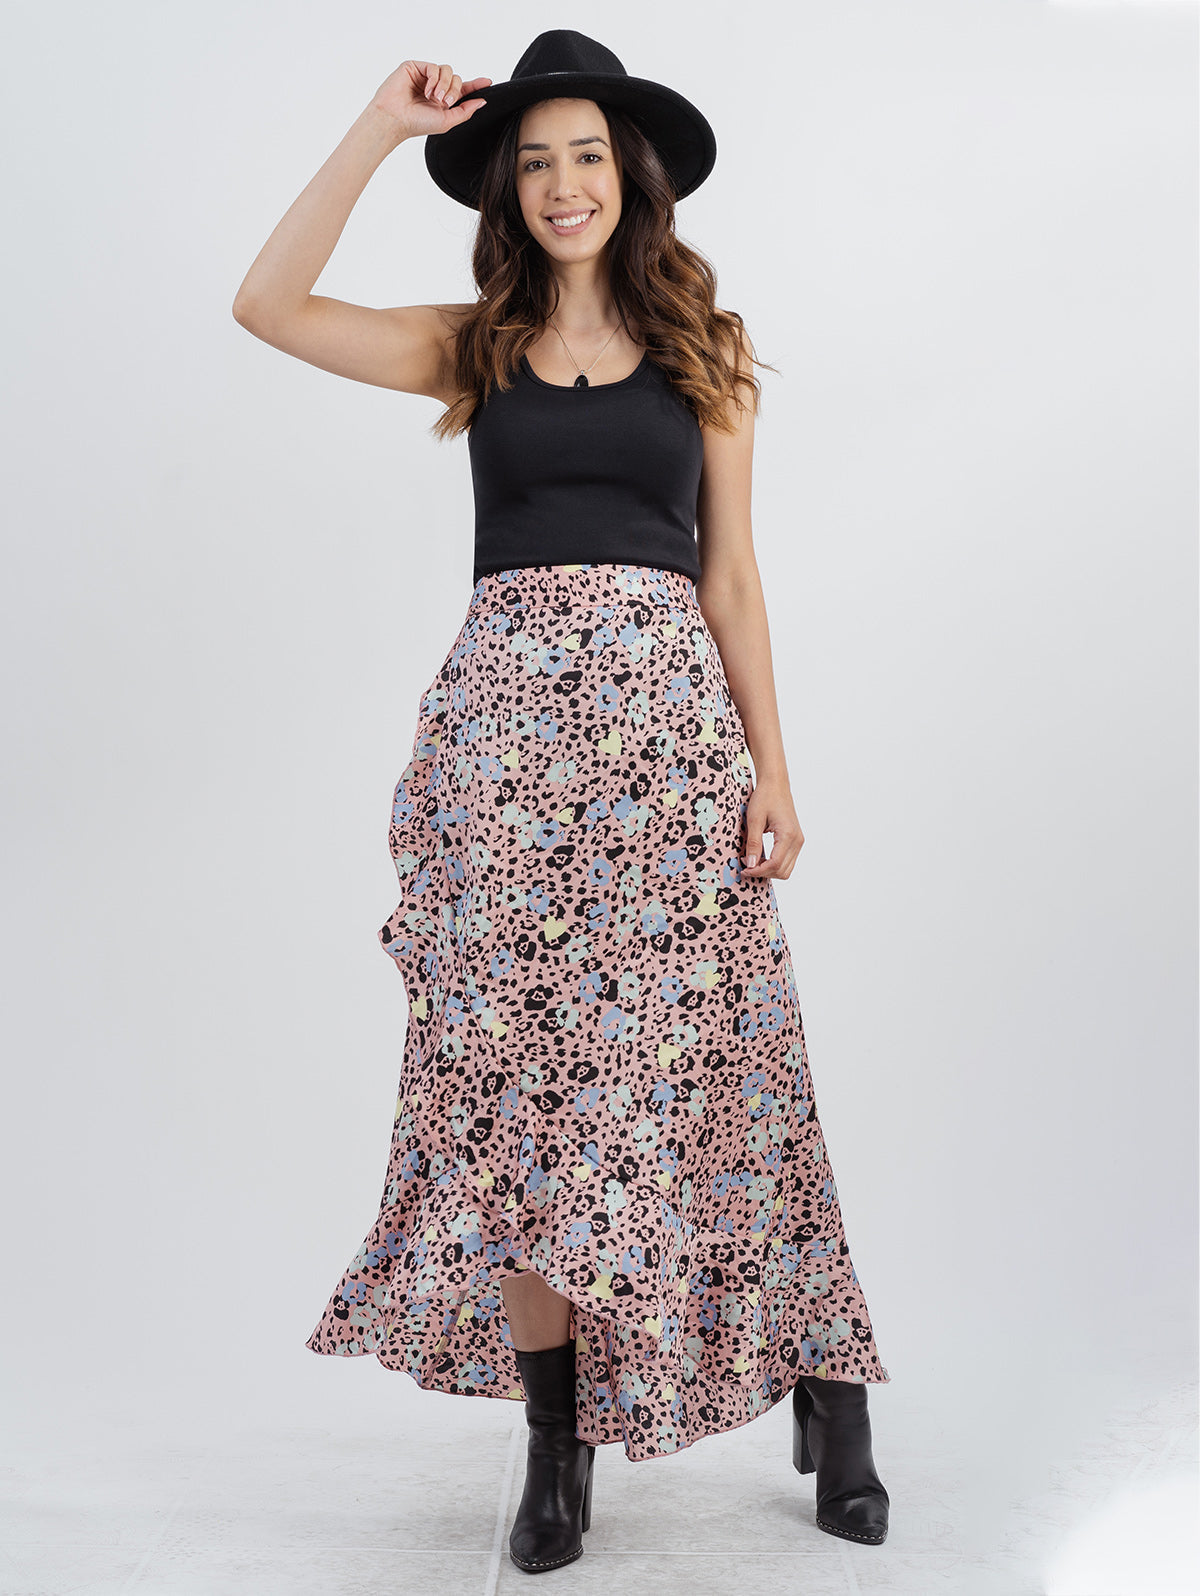 American Bling Plus Size Women’s Luxury Leopard Print Satin Frill Midi Skirt - Montana West World